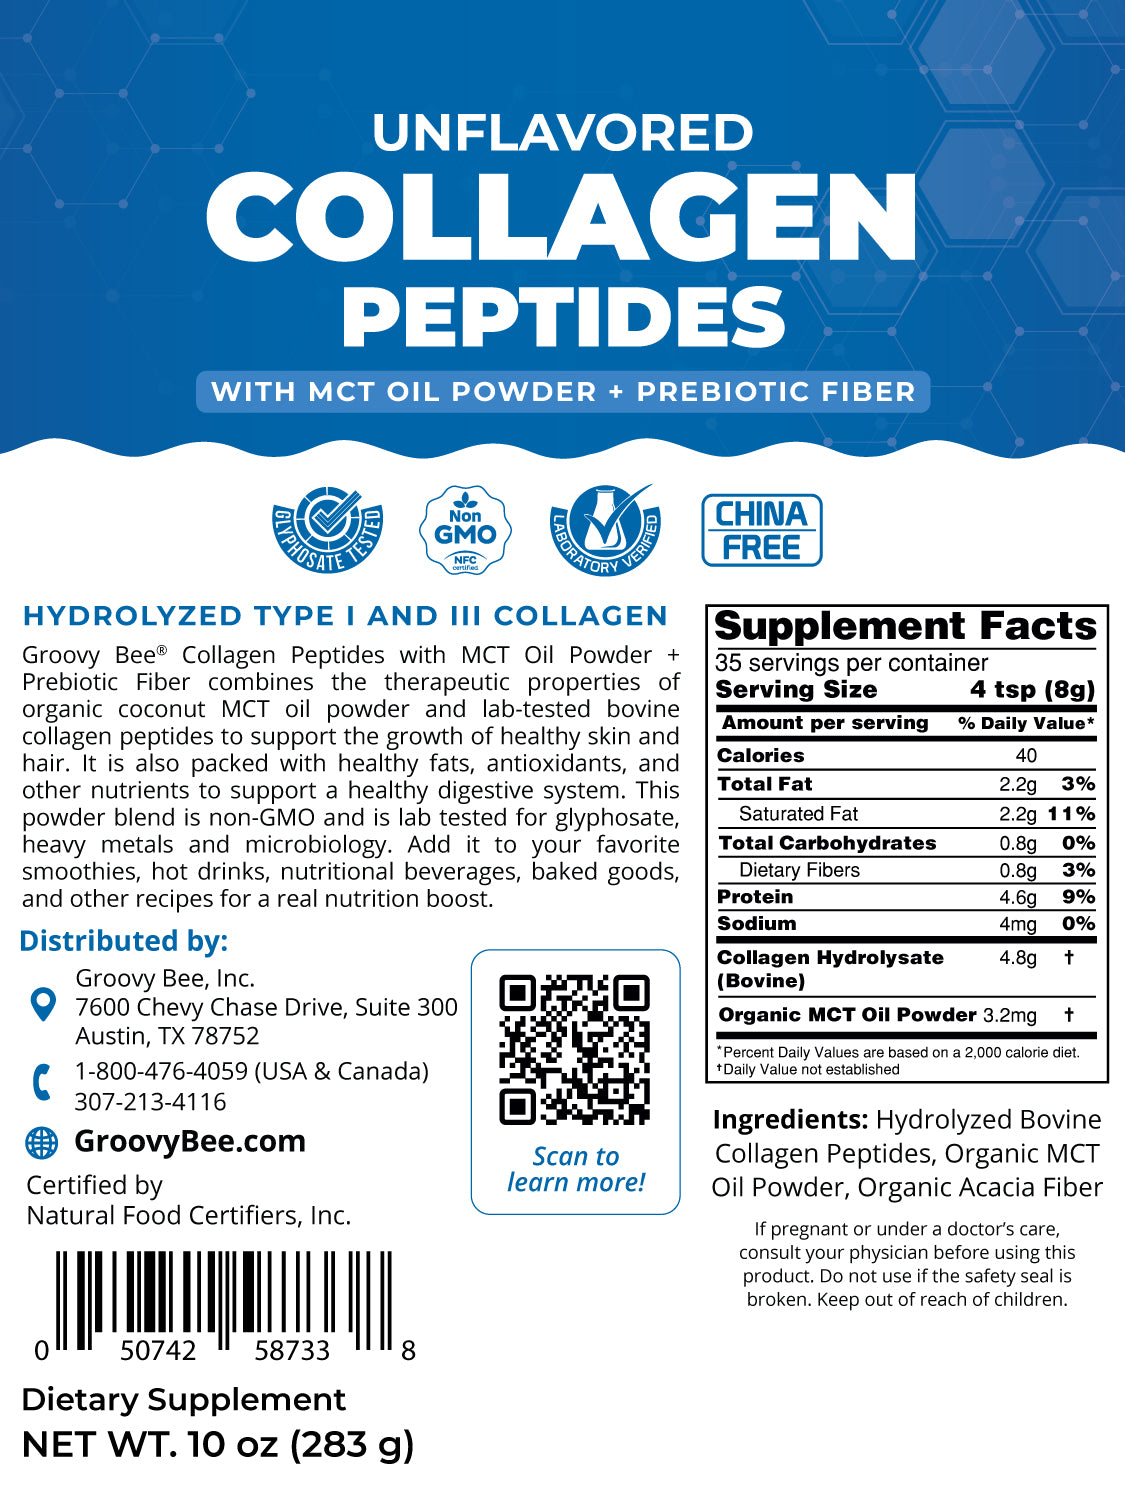 Collagen Peptides + MCT Oil Powder + Prebiotic Fiber - Unflavored 10 oz (283g)